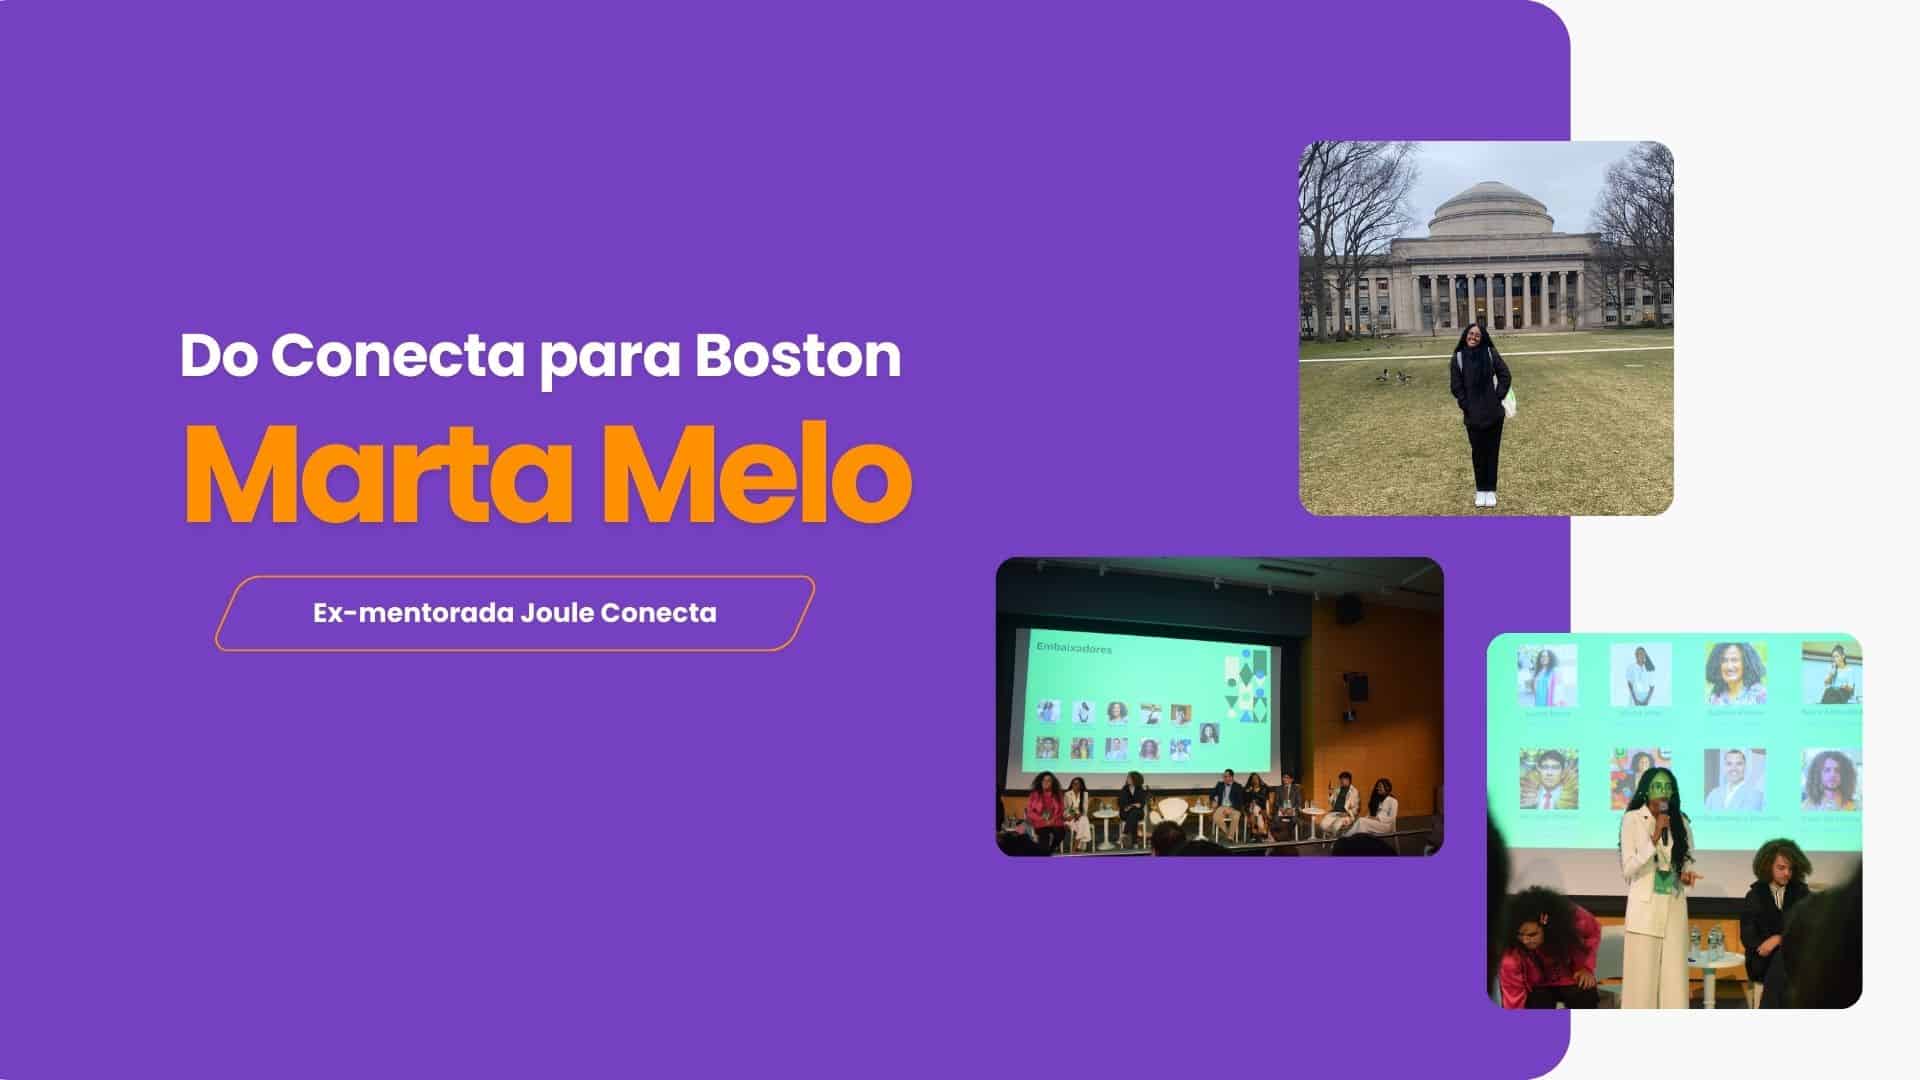 Do Conecta para Boston: Conheça a história da Marta Melo